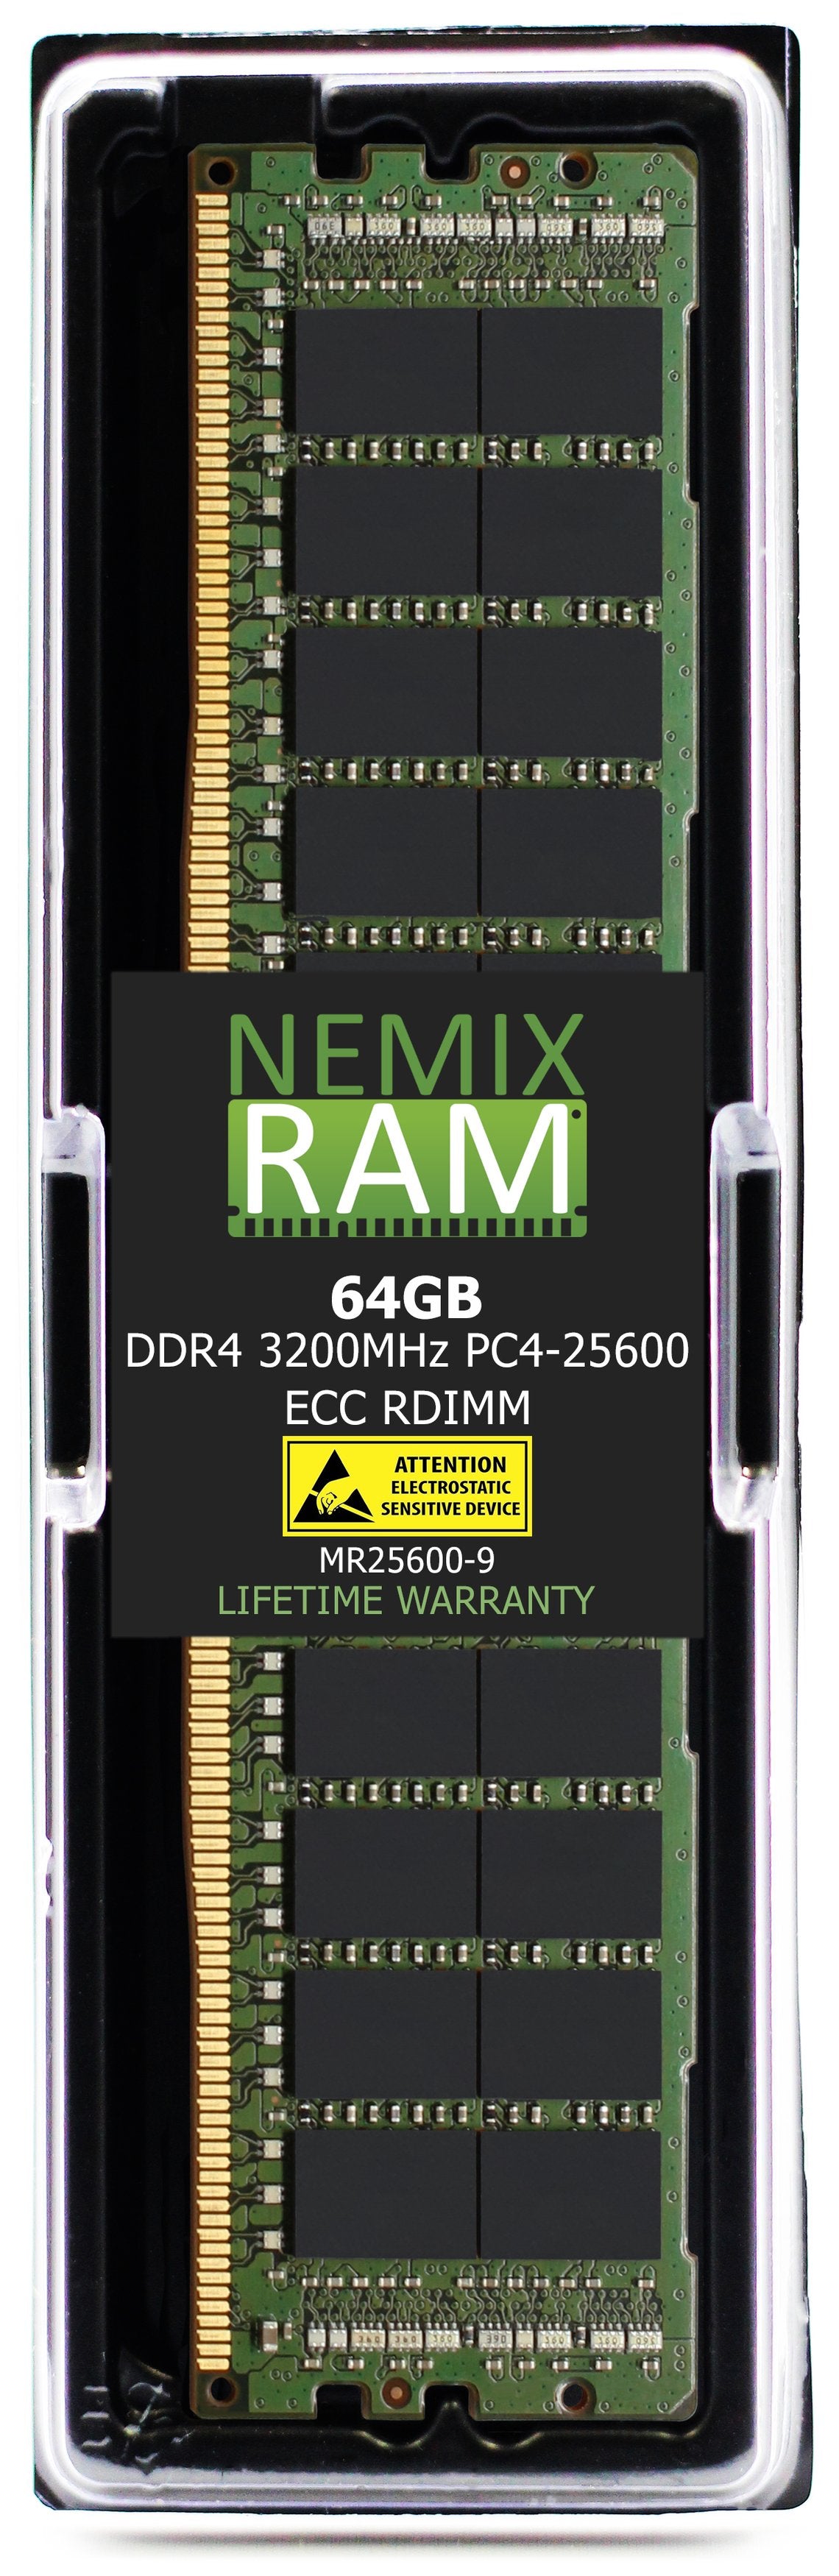 64GB DDR4 3200MHZ PC4-25600 RDIMM Compatible with Supermicro MEM-DR464MC-ER32